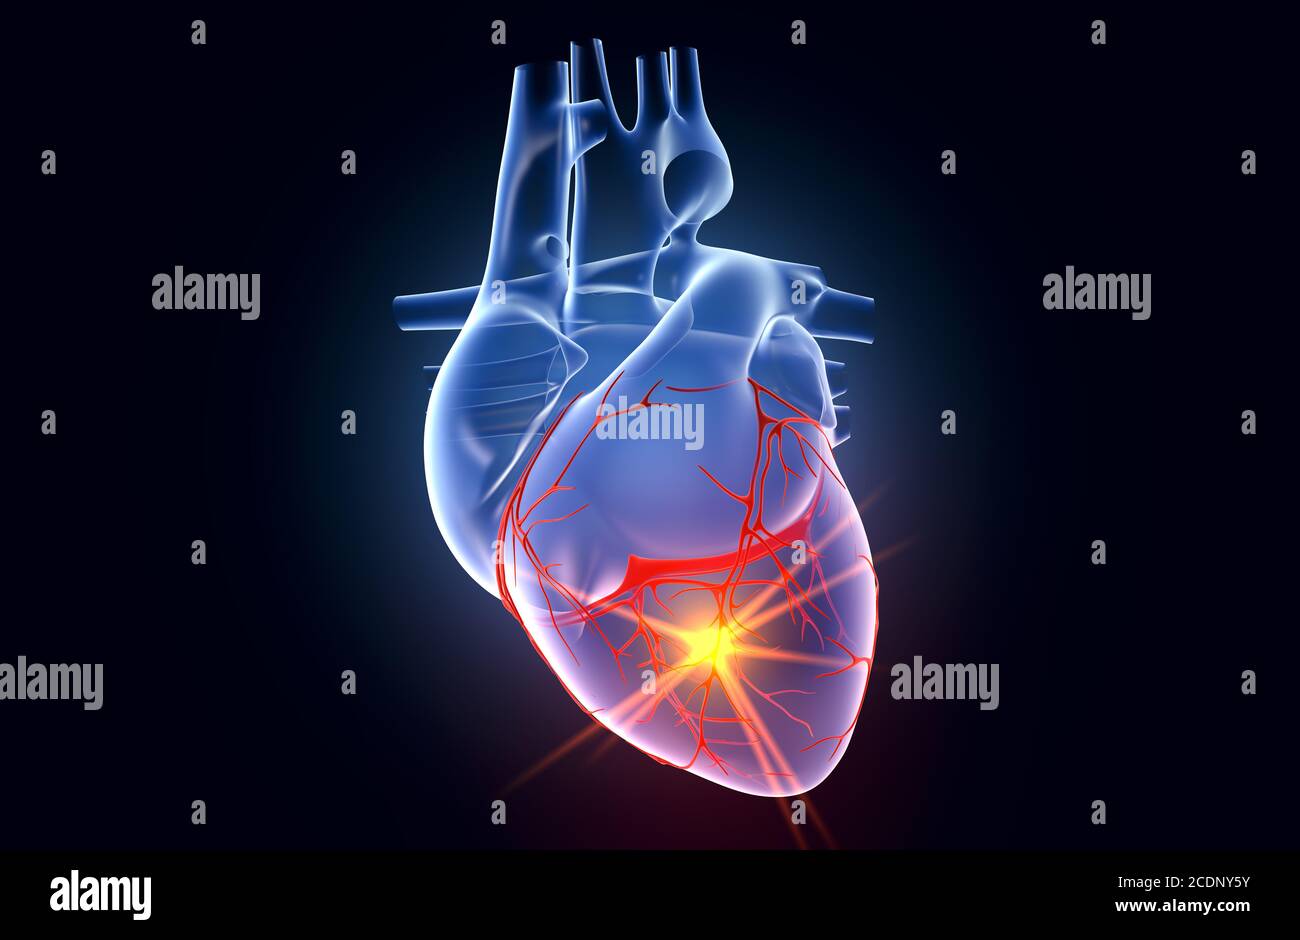 Human heart with coronary artery and ECG waves Stock Photo